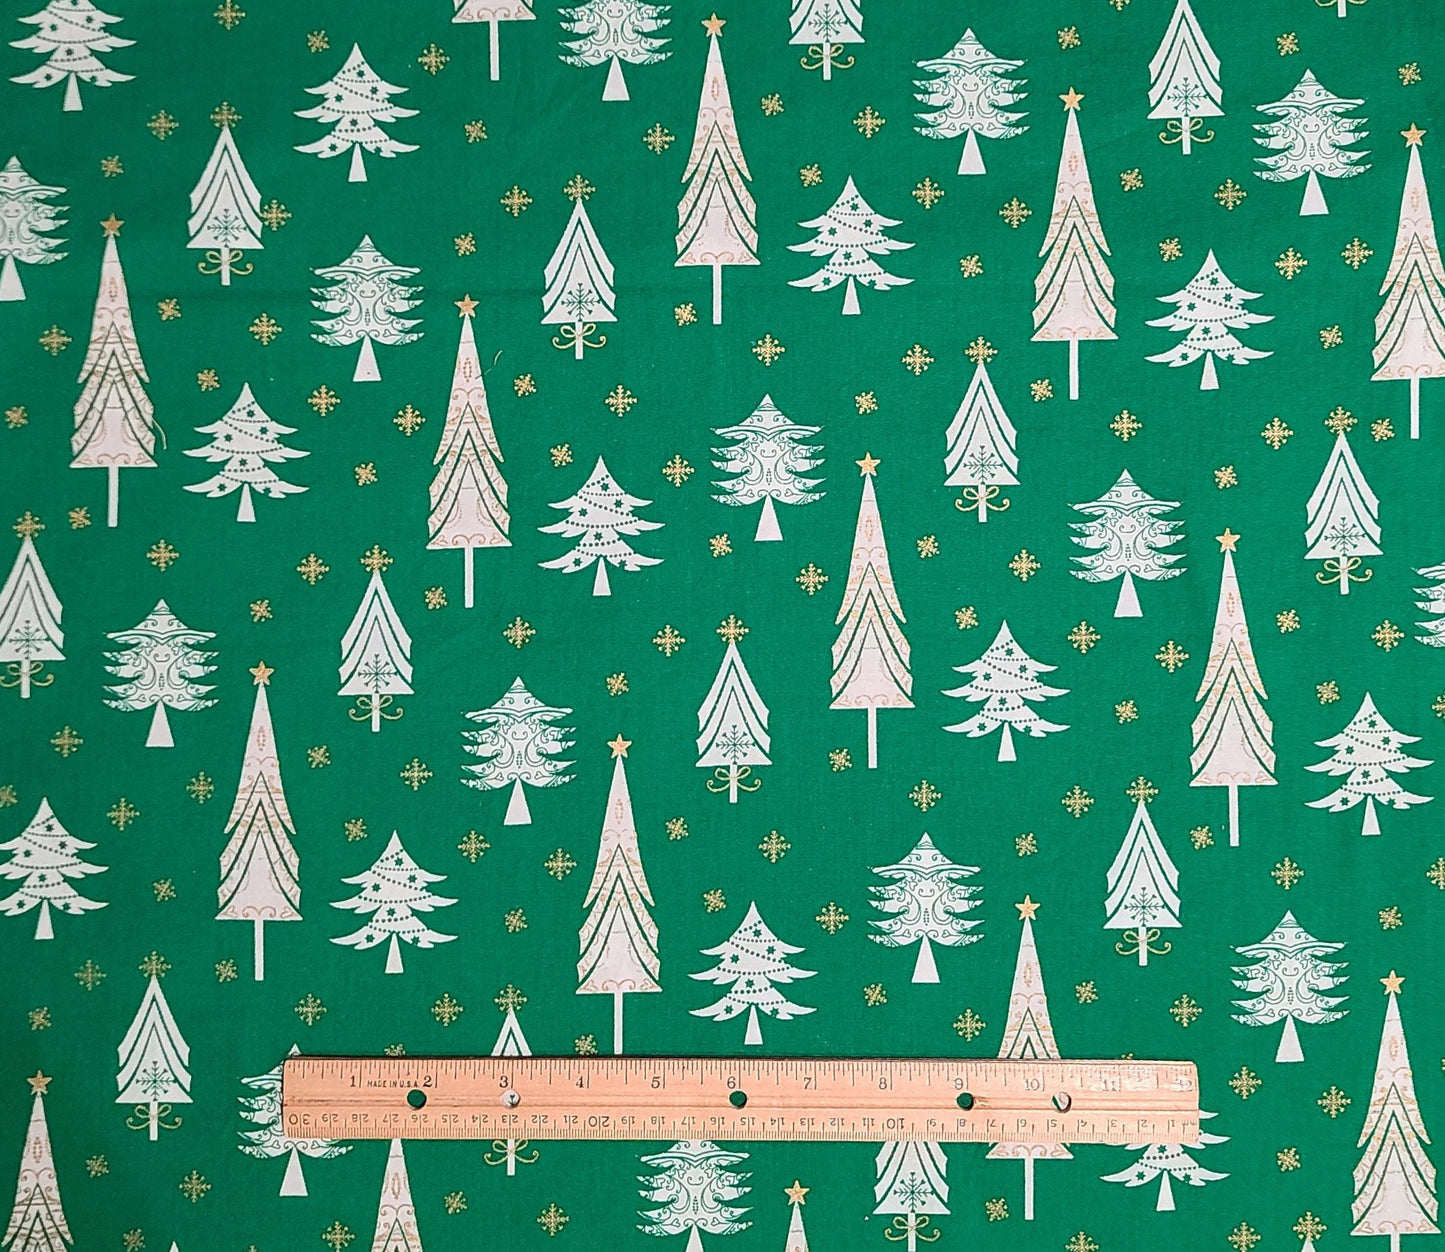 EOB - JoAnn Fabrics - Green Fabric / White Christmas Tree / Gold Metallic Accents / Snowflakes